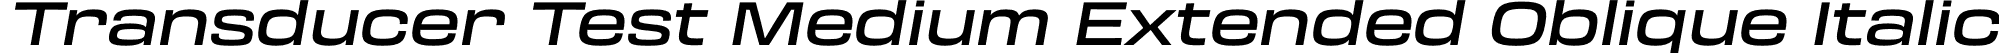 Transducer Test Medium Extended Oblique Italic font - TransducerTest-ExtendedMediumOblique.otf